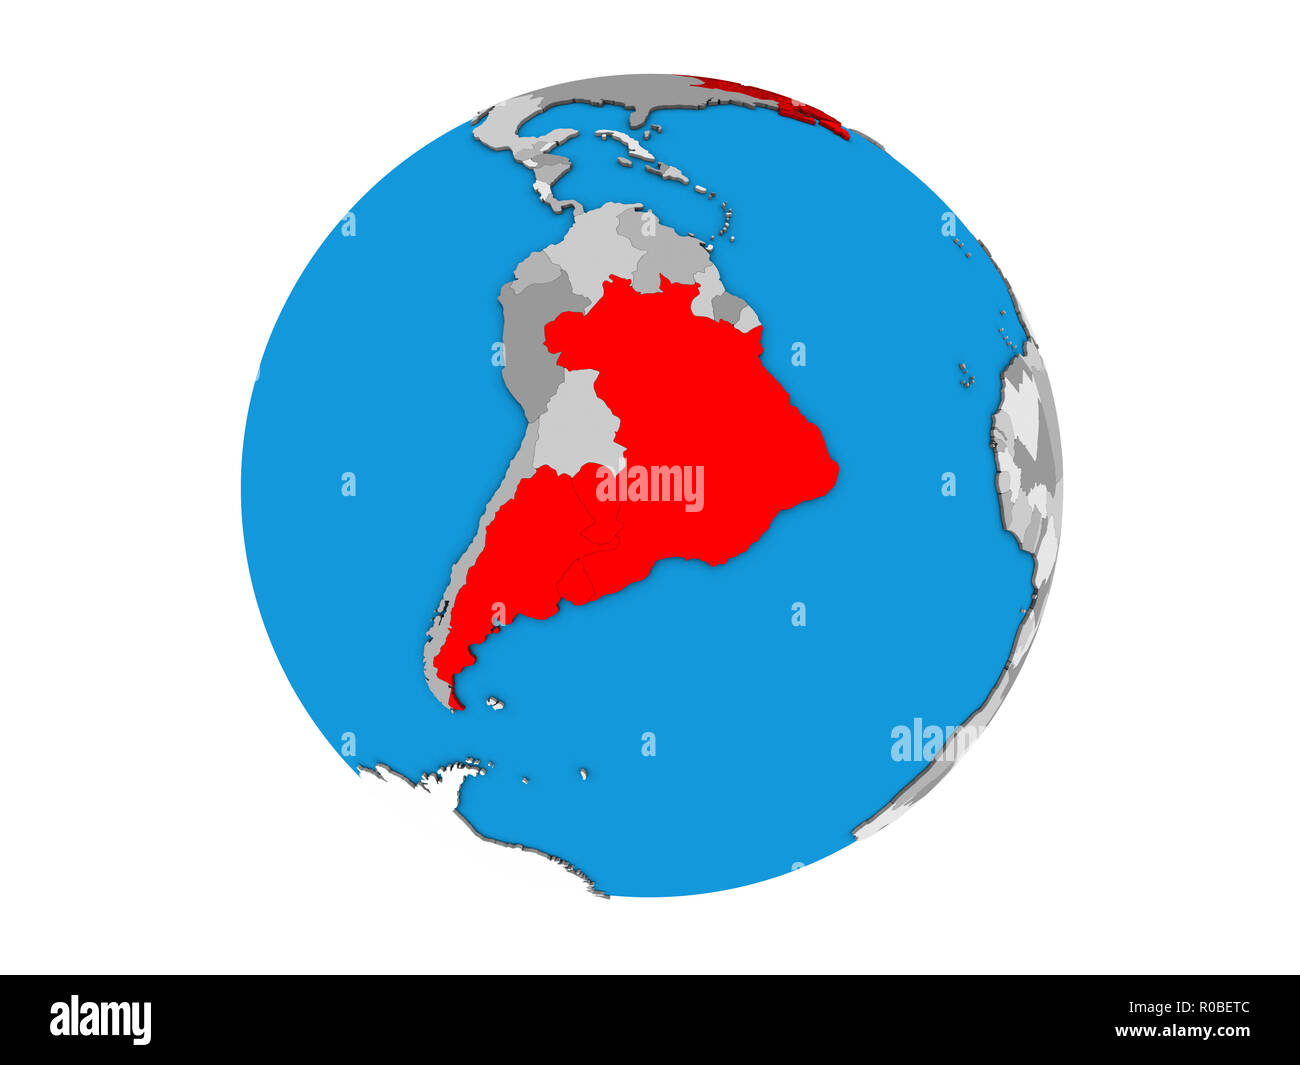 Mercosur memebers on blue political 3D globe. 3D illustration isolated on white background. Stock Photo